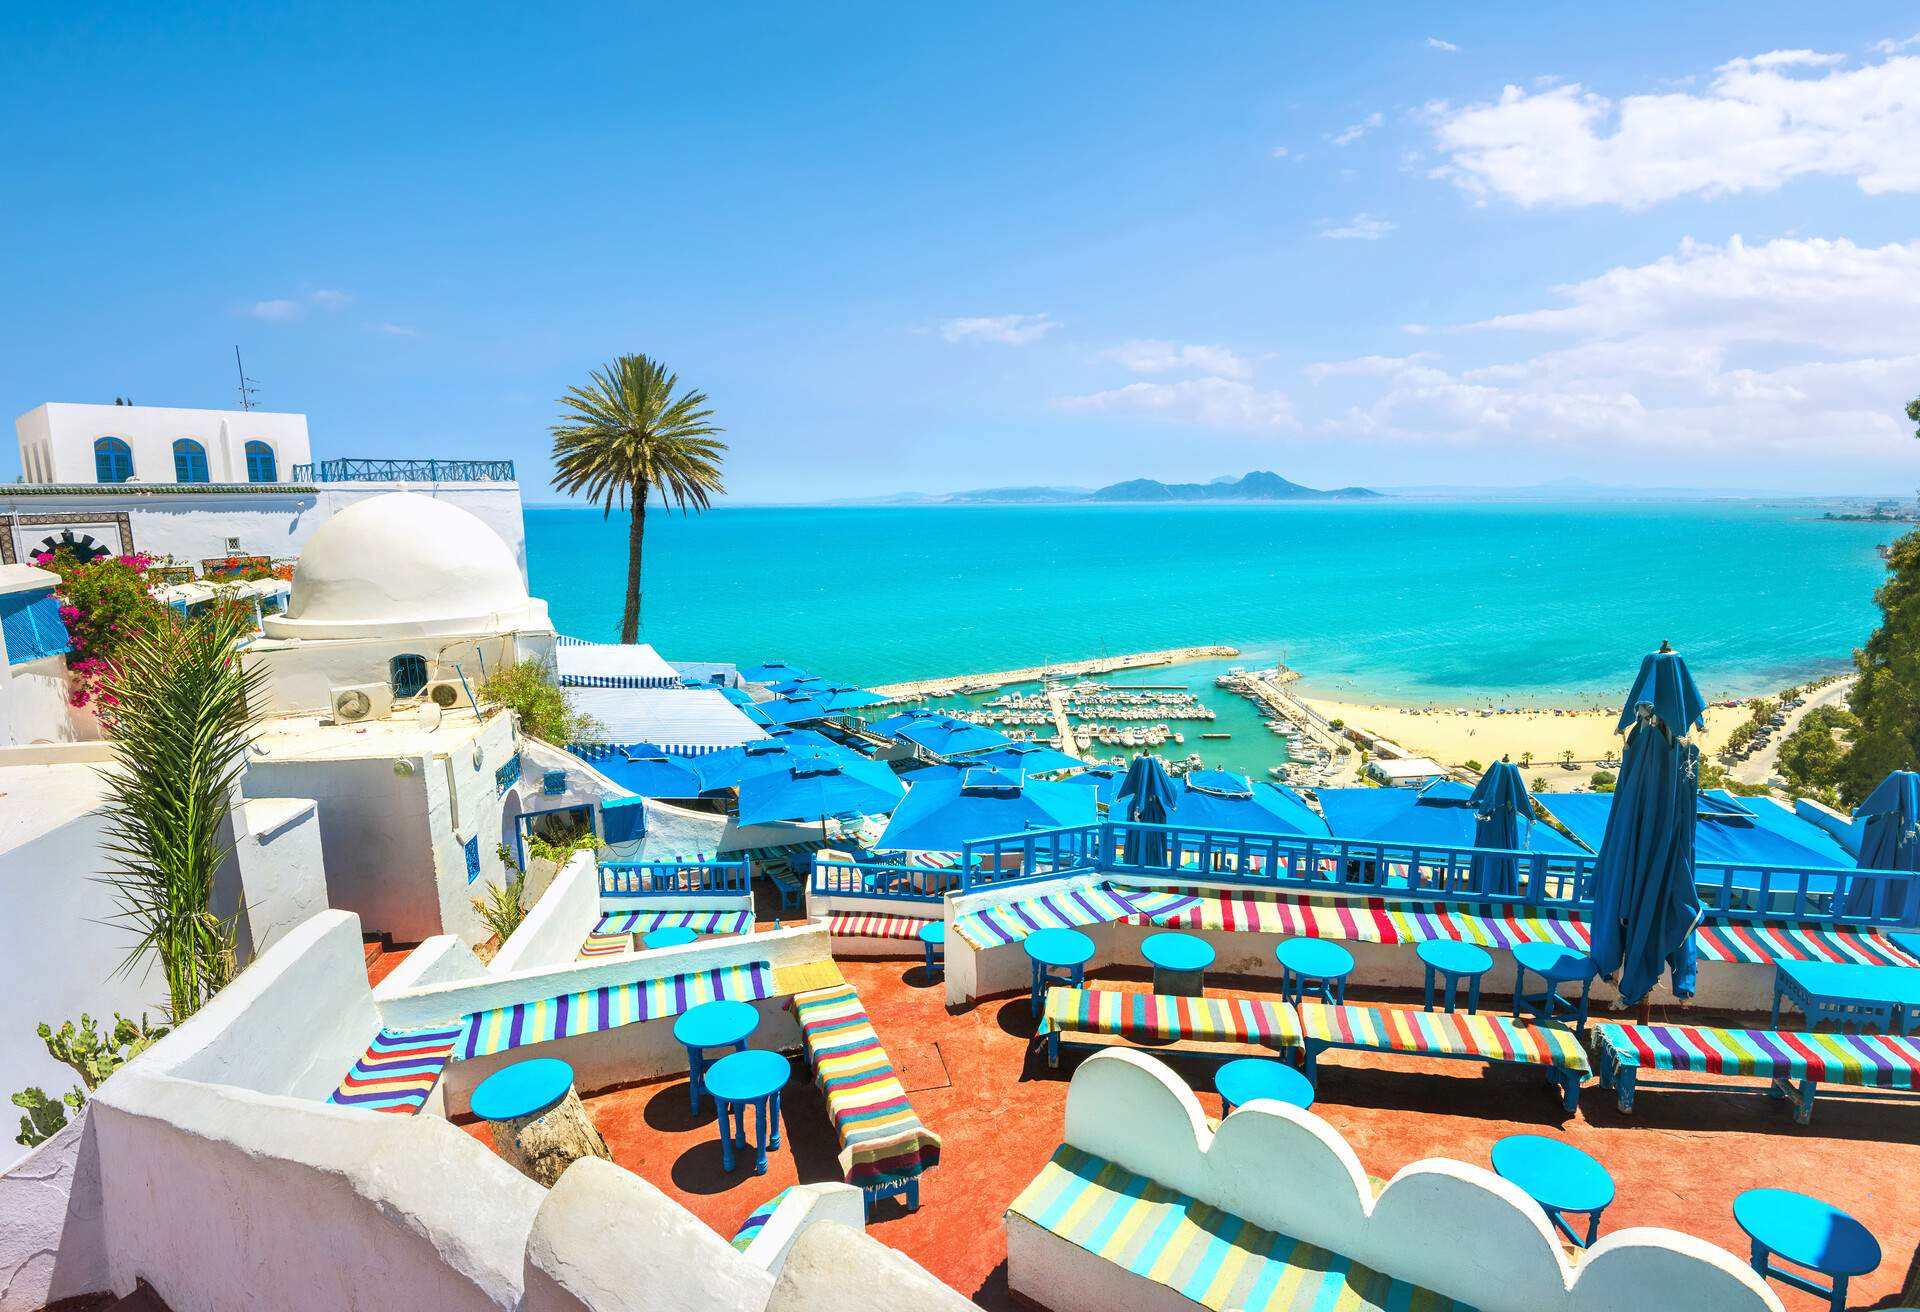 Beautiful view over of seaside and white blue village Sidi Bou Said. Tunisia, North Africa.; Shutterstock ID 686855305; Purpose: CITY; Brand (KAYAK, Momondo, Any): KAYAK